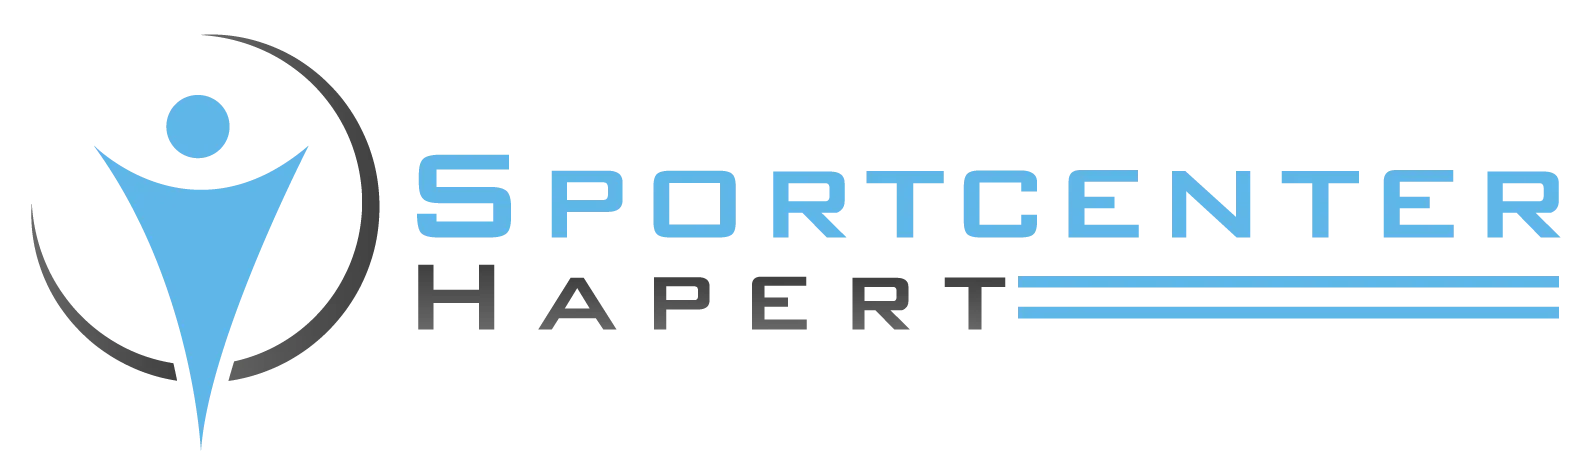 Sportcenter_Hapert-logo PNG (2).png